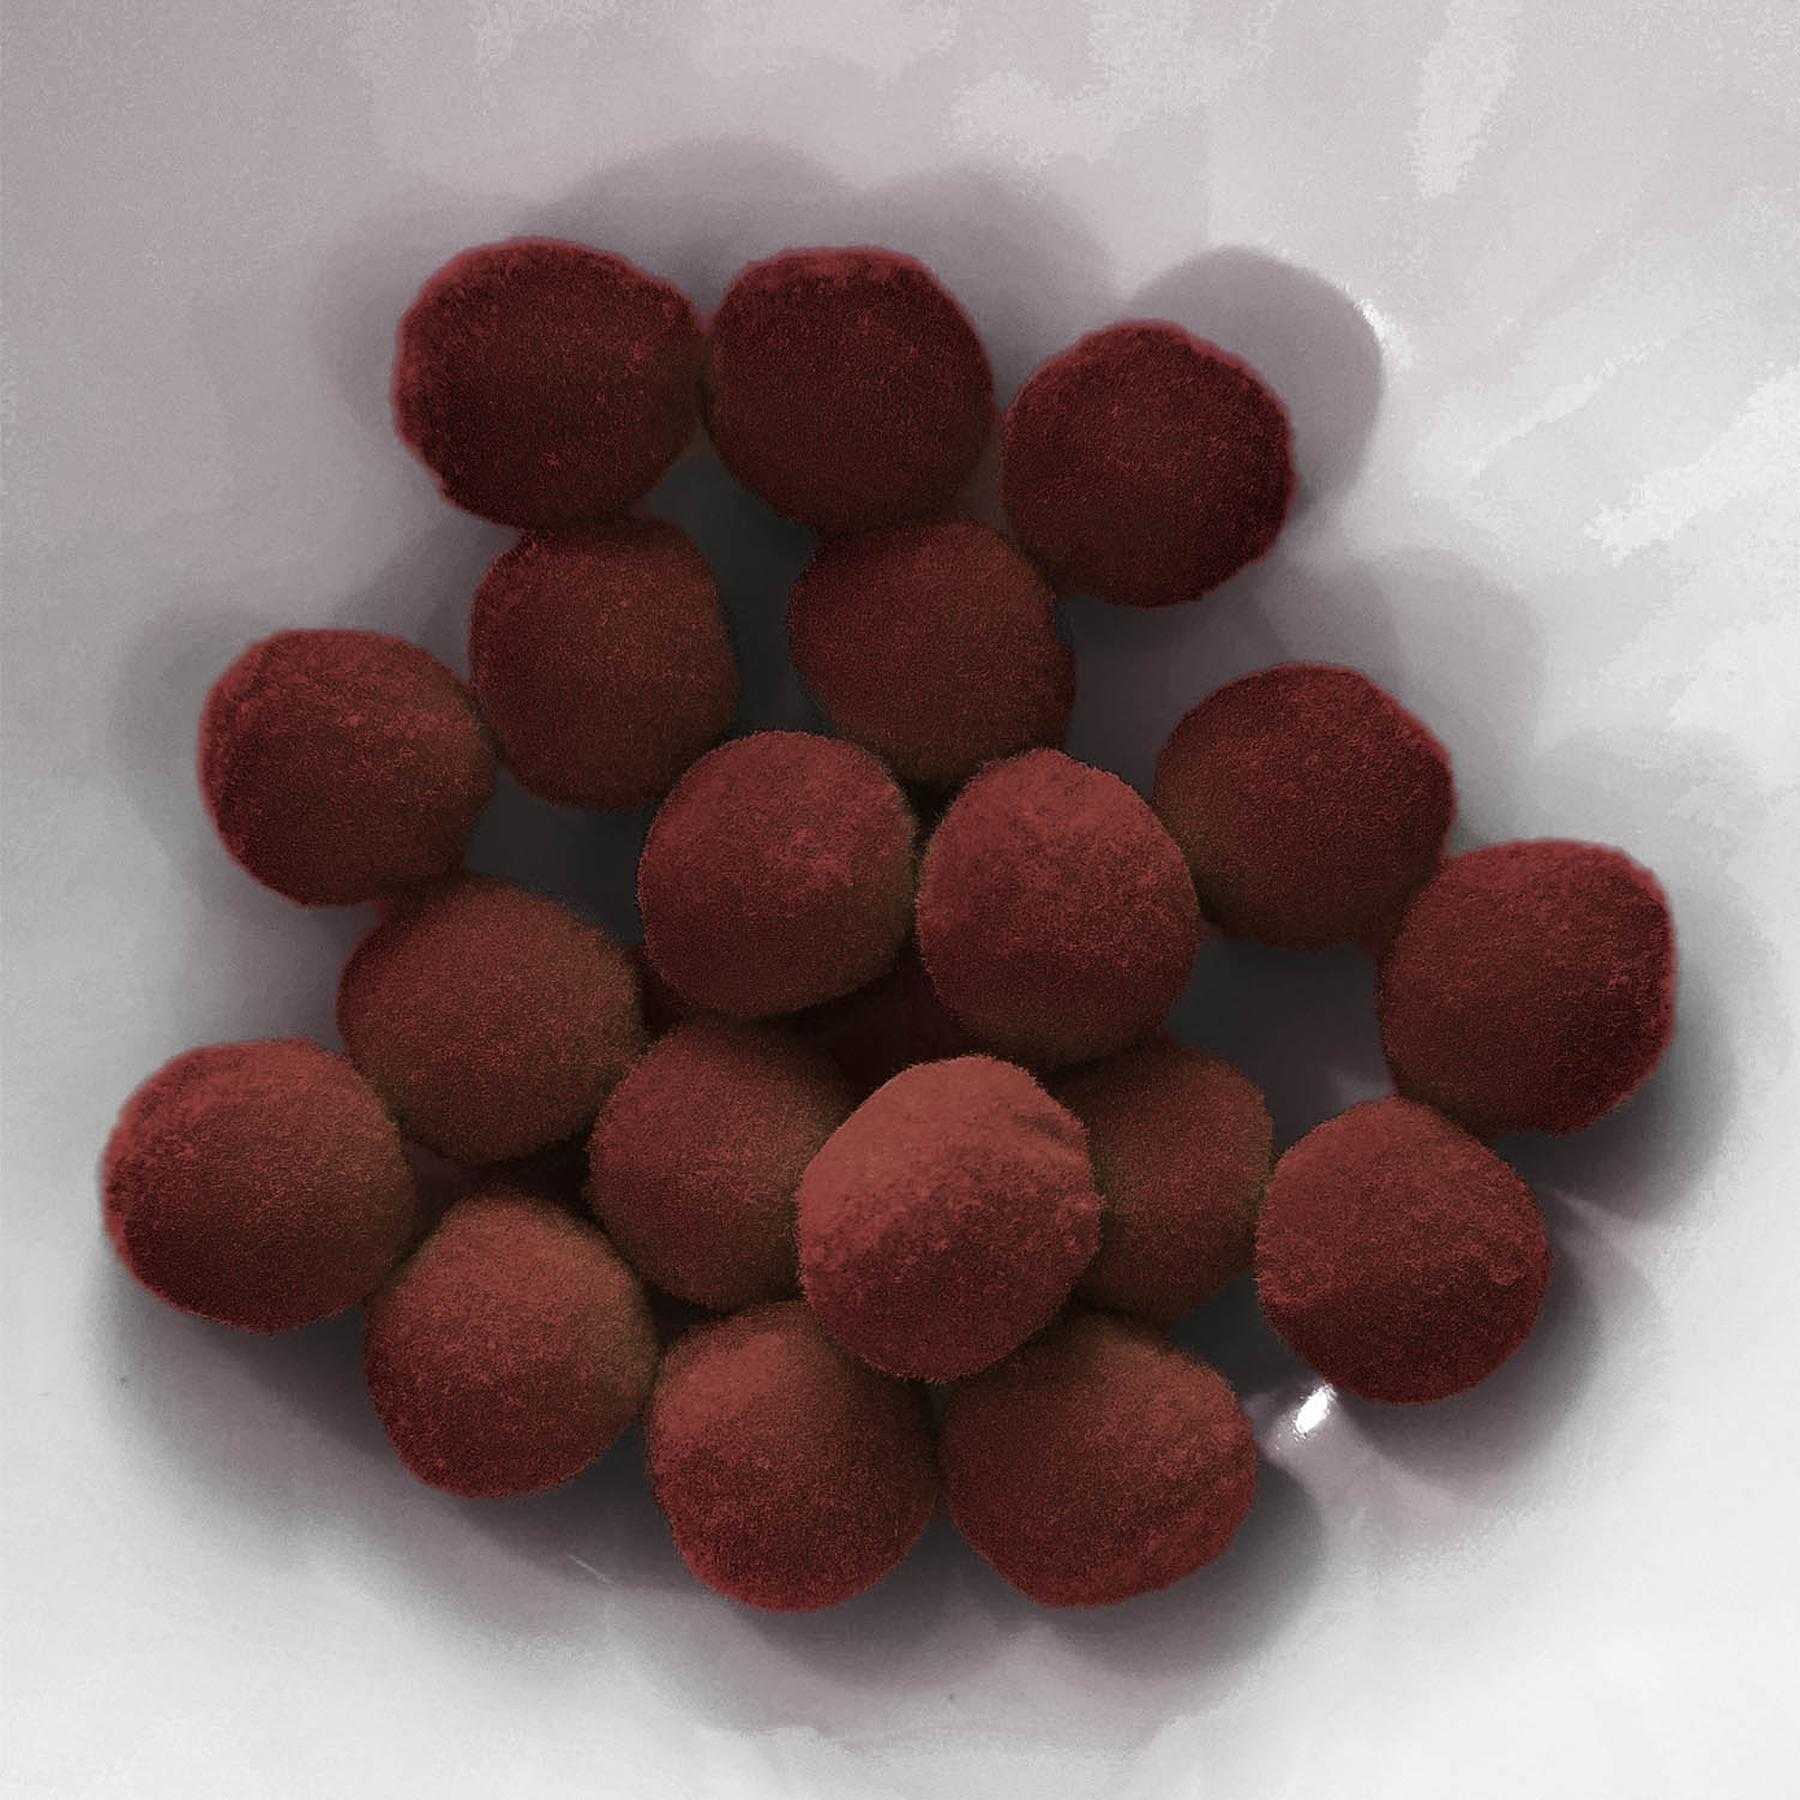 PomPon / Bälle aus Baumwolle - 25 mm / 20er Set - Rot dunkel / Bordeaux